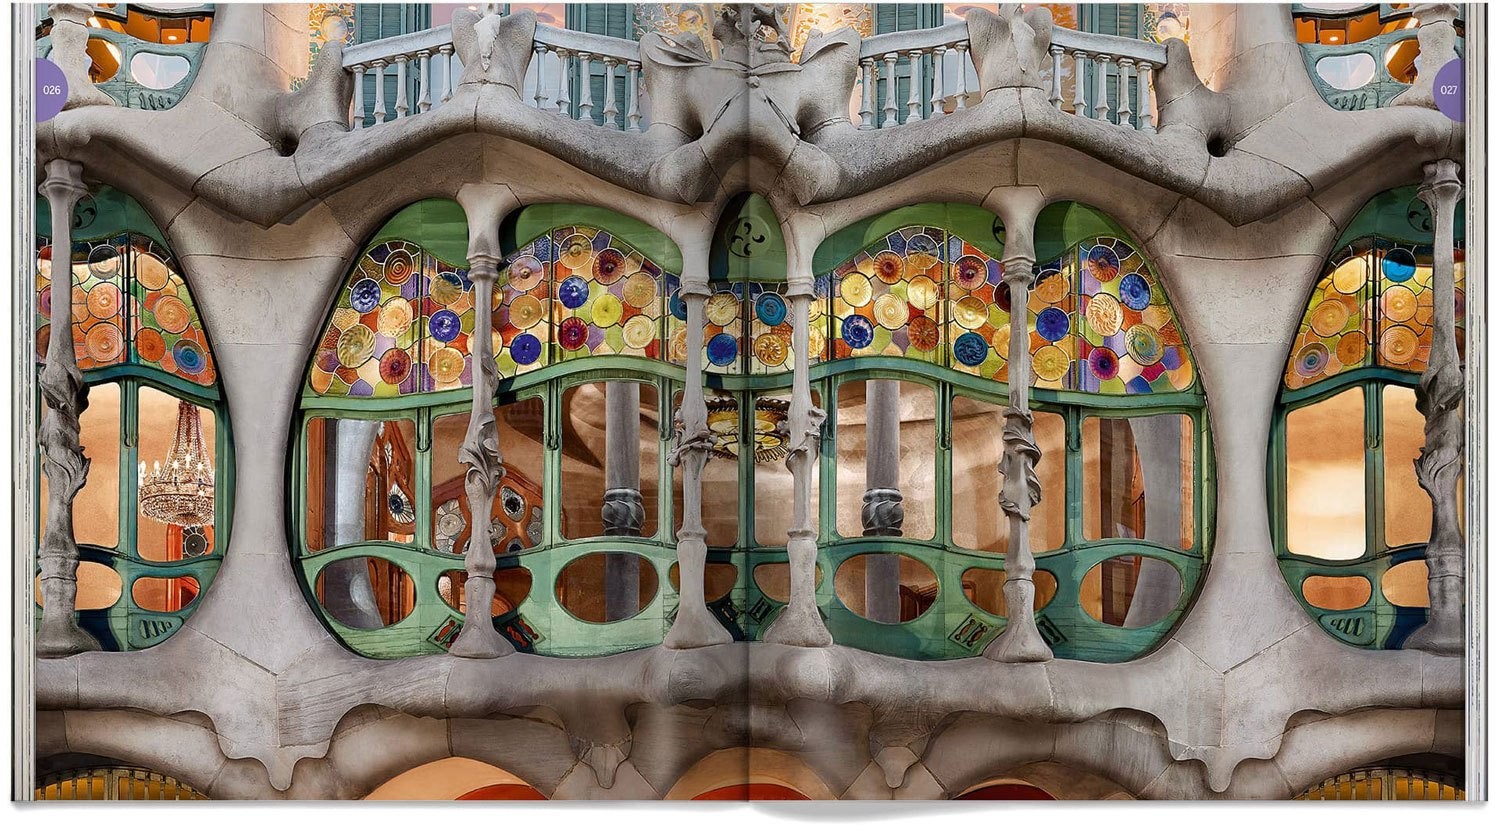 Book On Casa Batllo In Barcelona Work Of Gaudi